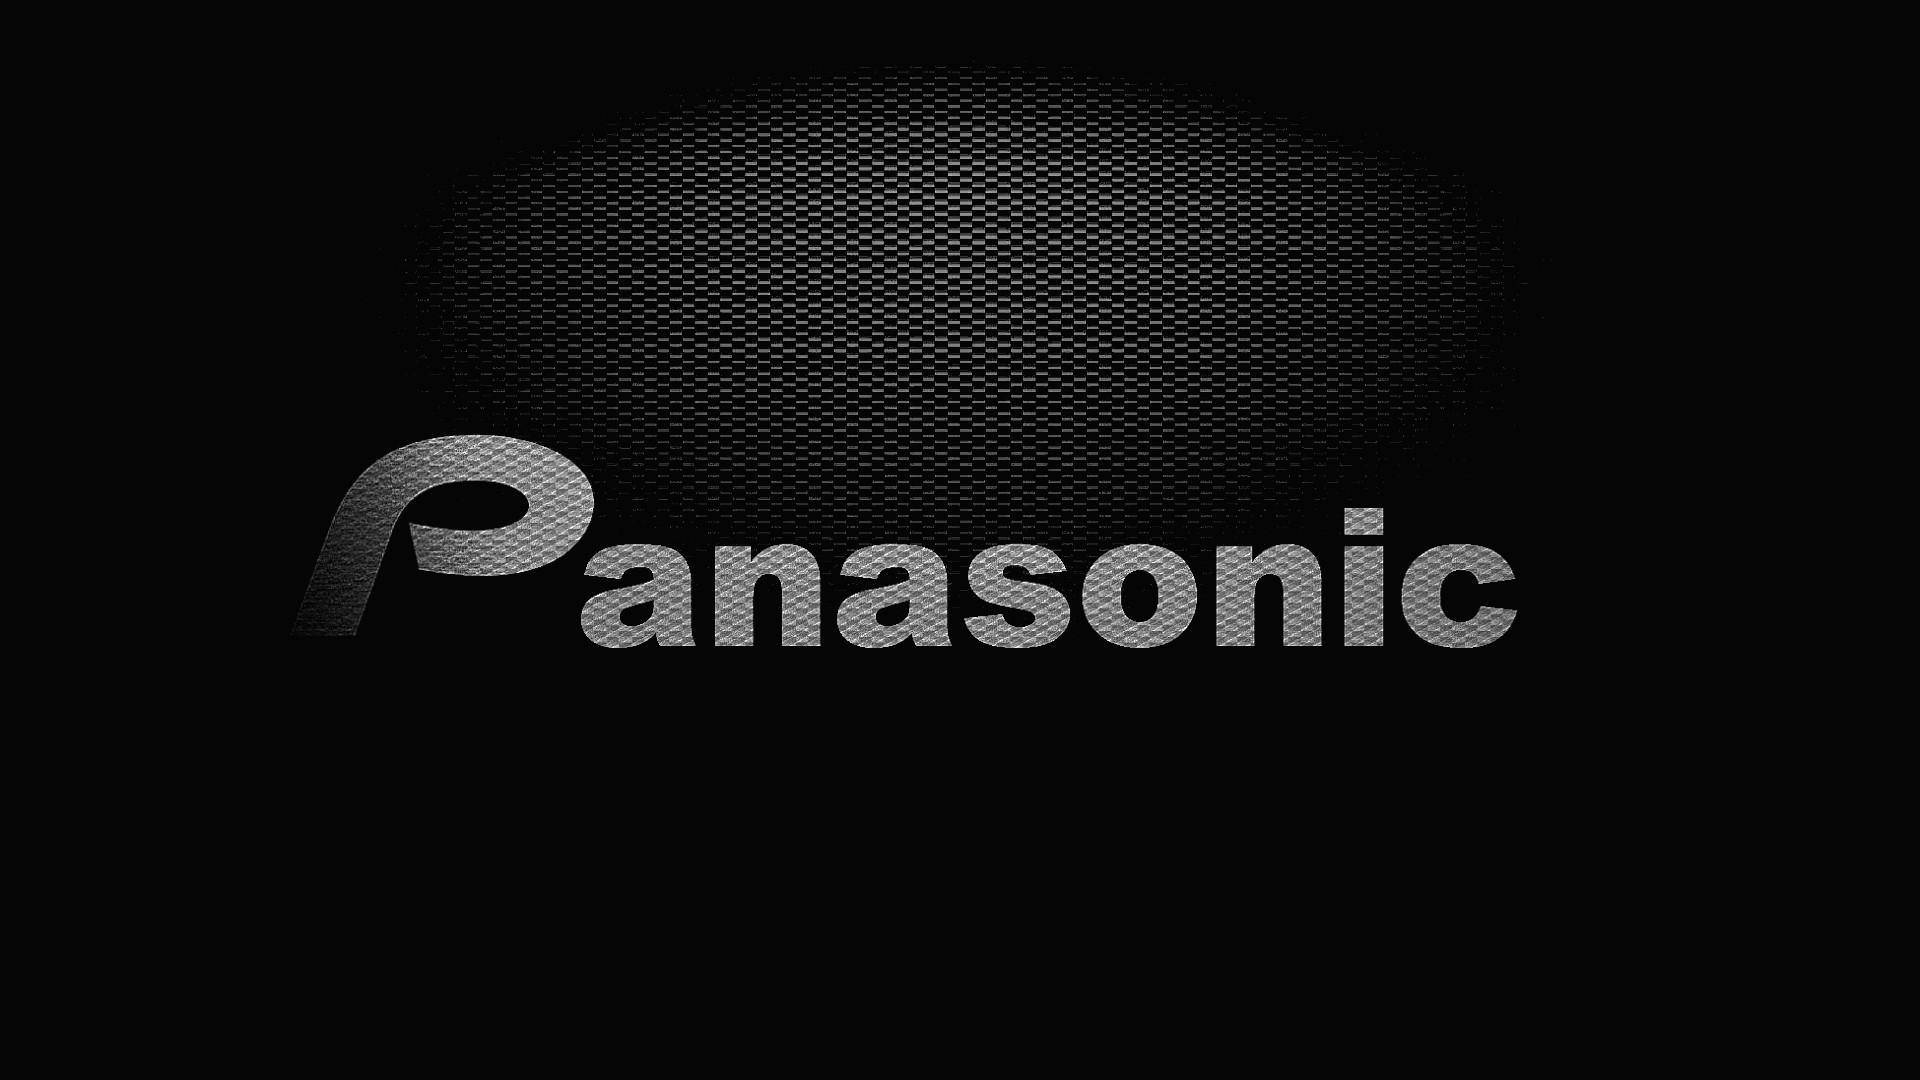 Grey Panasonic In Black Background